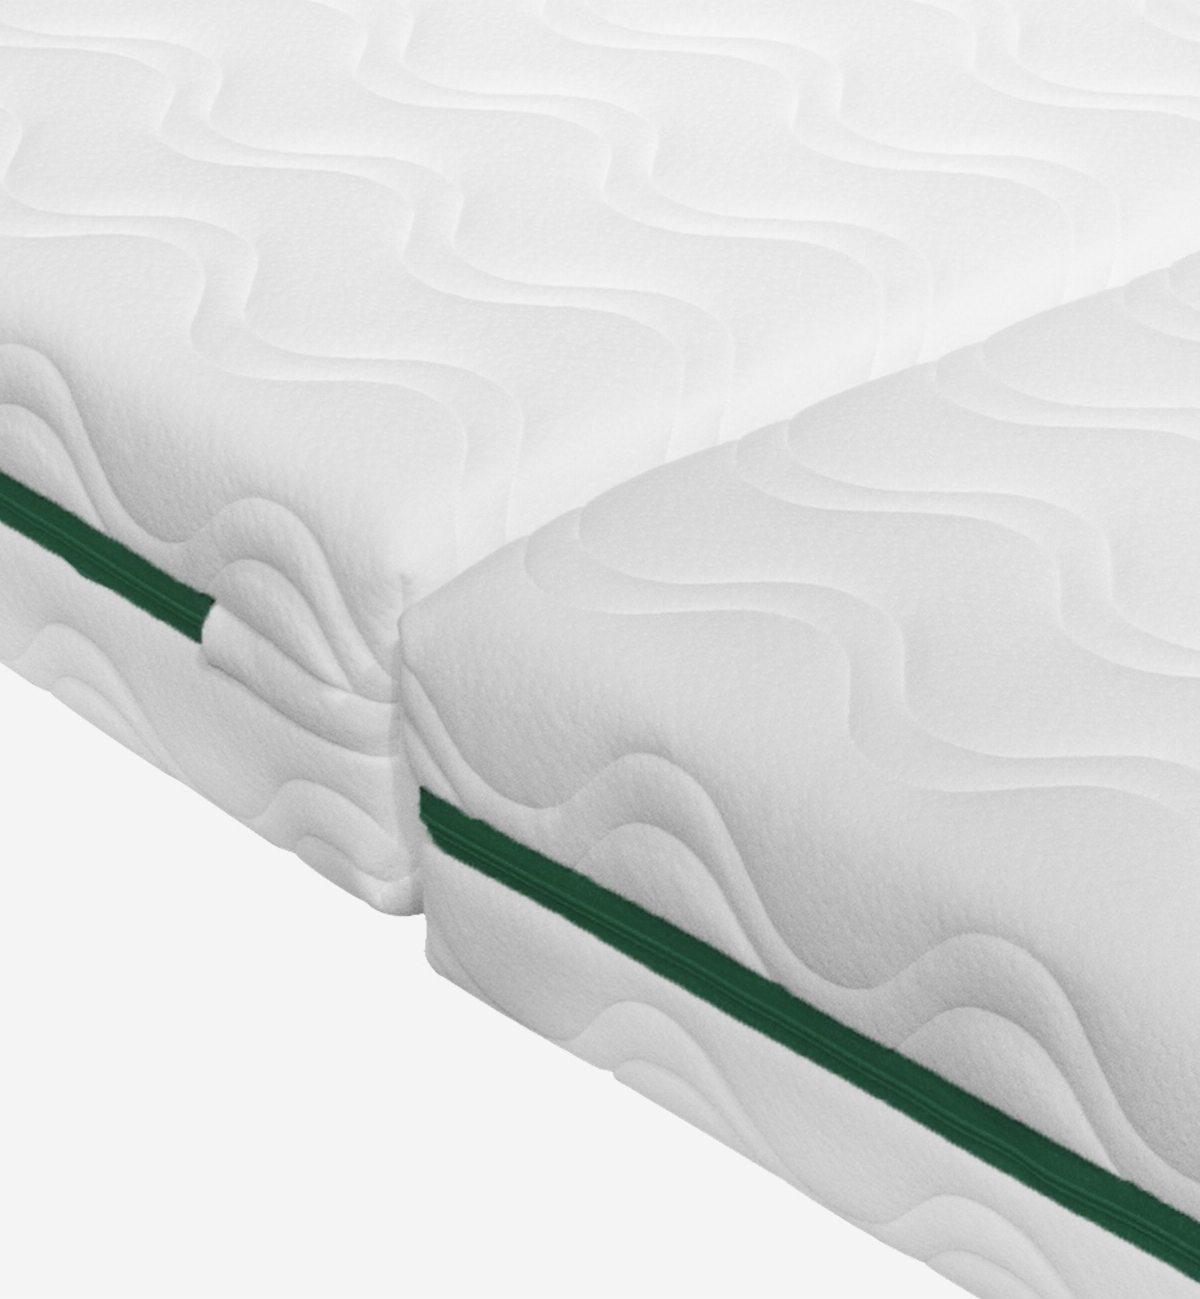 100% natural mattress for children Aloenatura